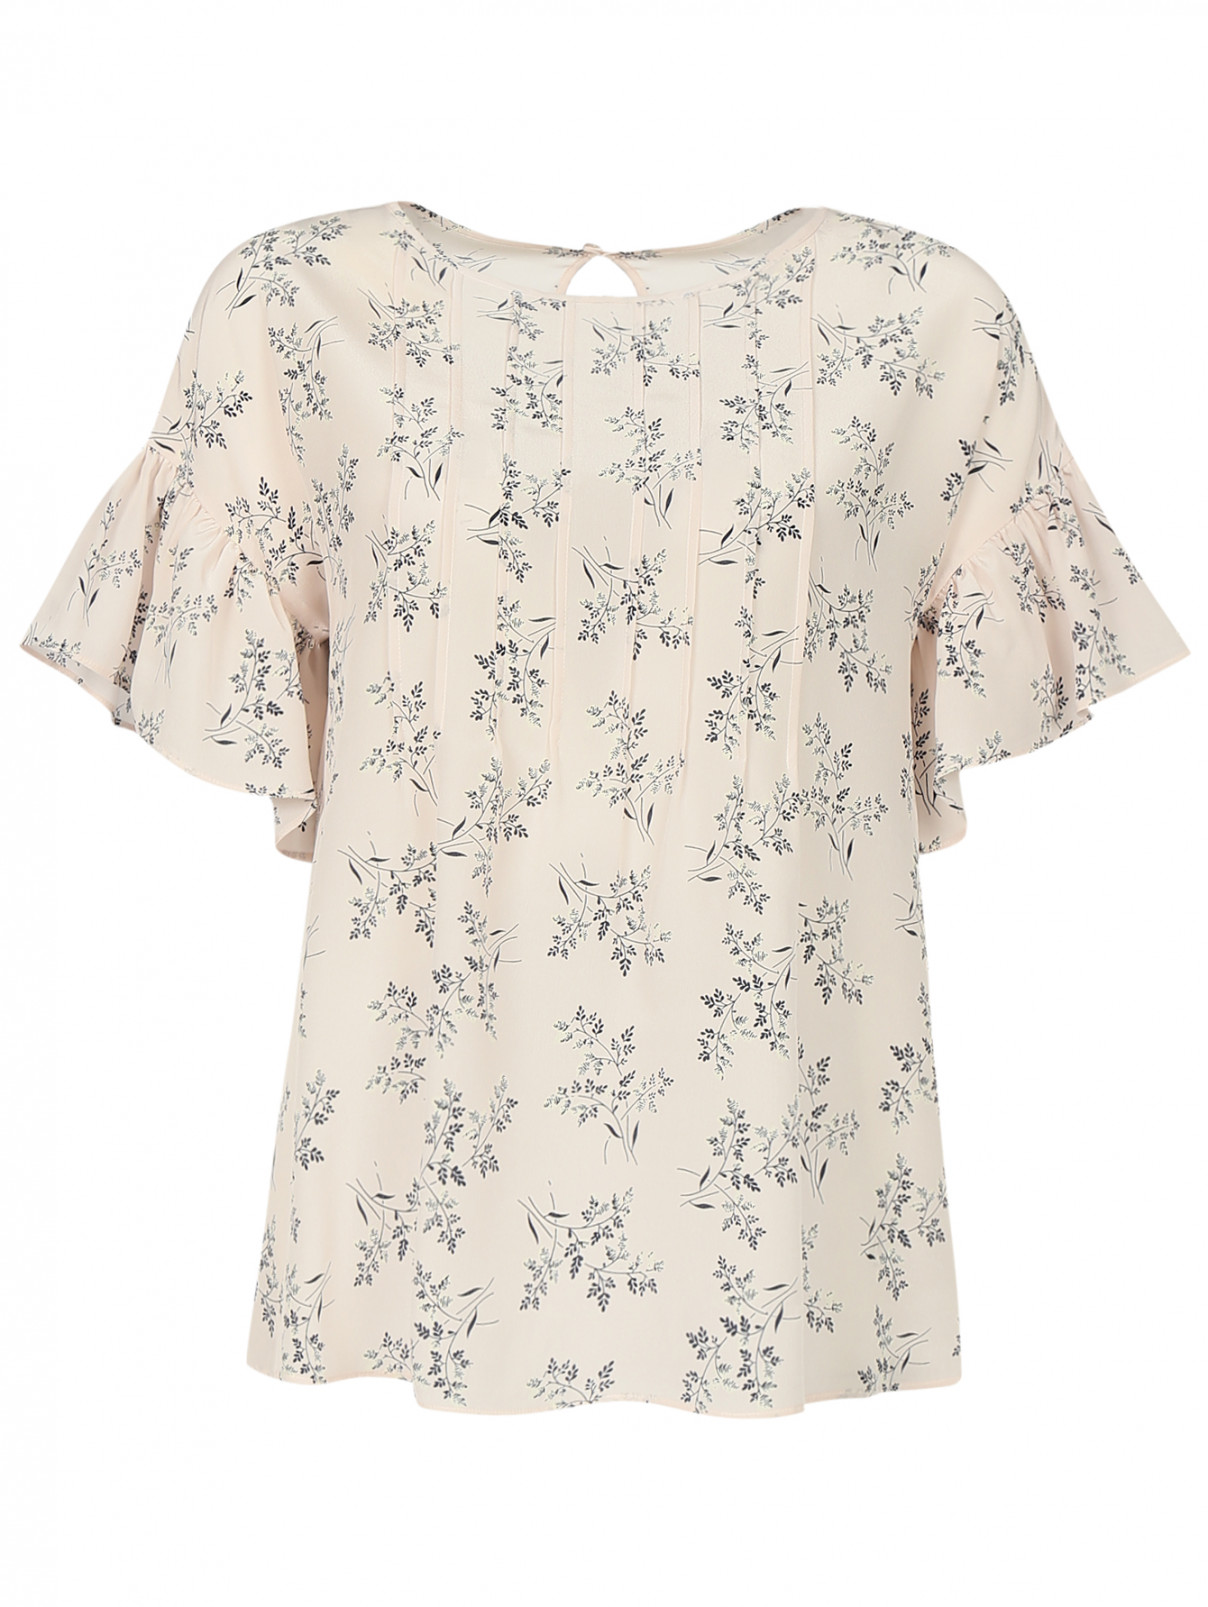 Блуза из шелка с коротким рукавом Weekend Max Mara  –  Общий вид  – Цвет:  Узор